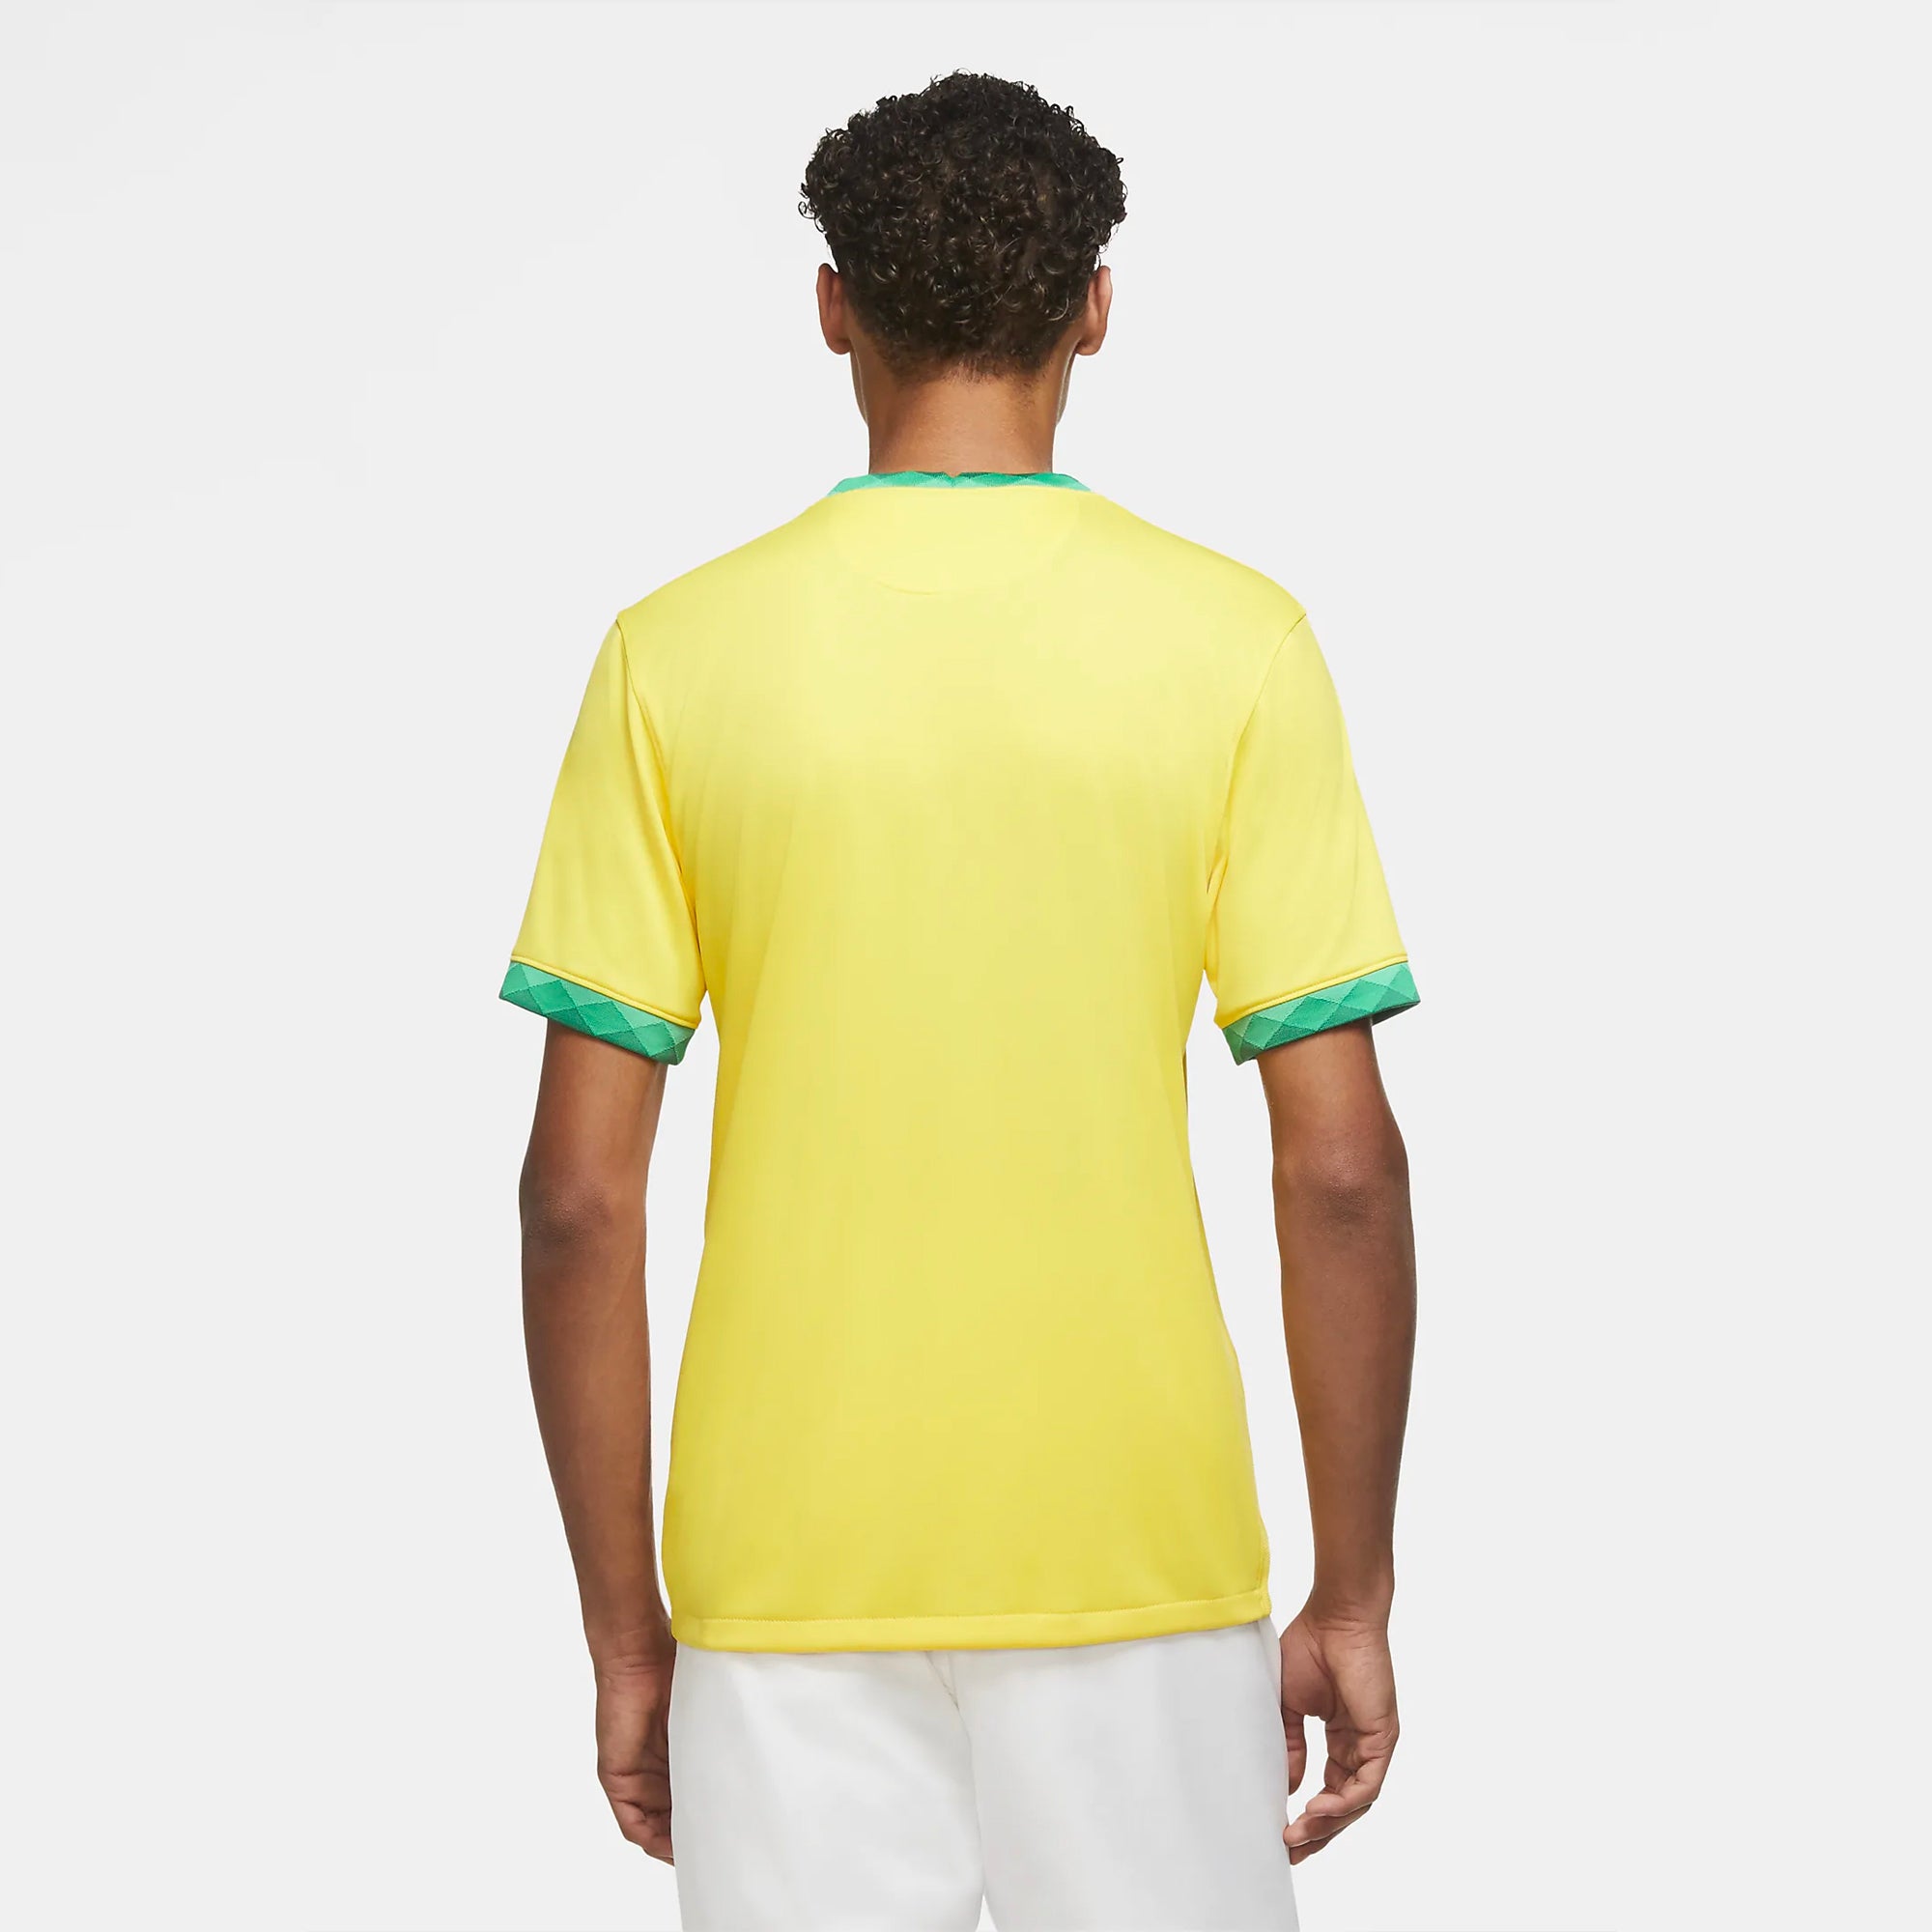 Nike Brasil Home 20/21 Shirt 🇧🇷✓ - REVIEW AND ANALYSIS 